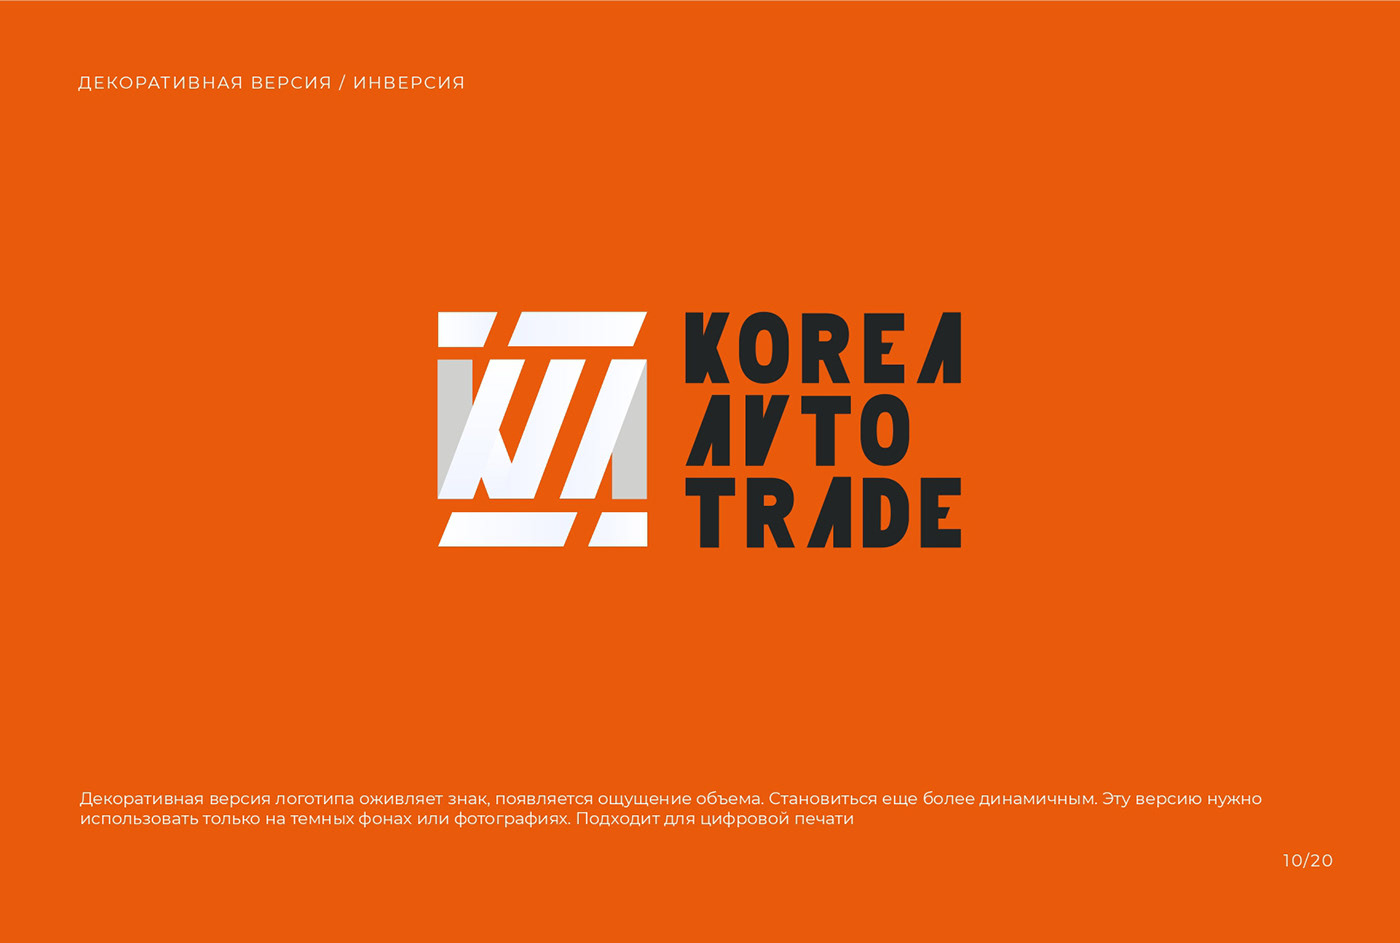 Логотип. Korea Avto Trade Компания по продаже Авто.
Декоративный логотип 
